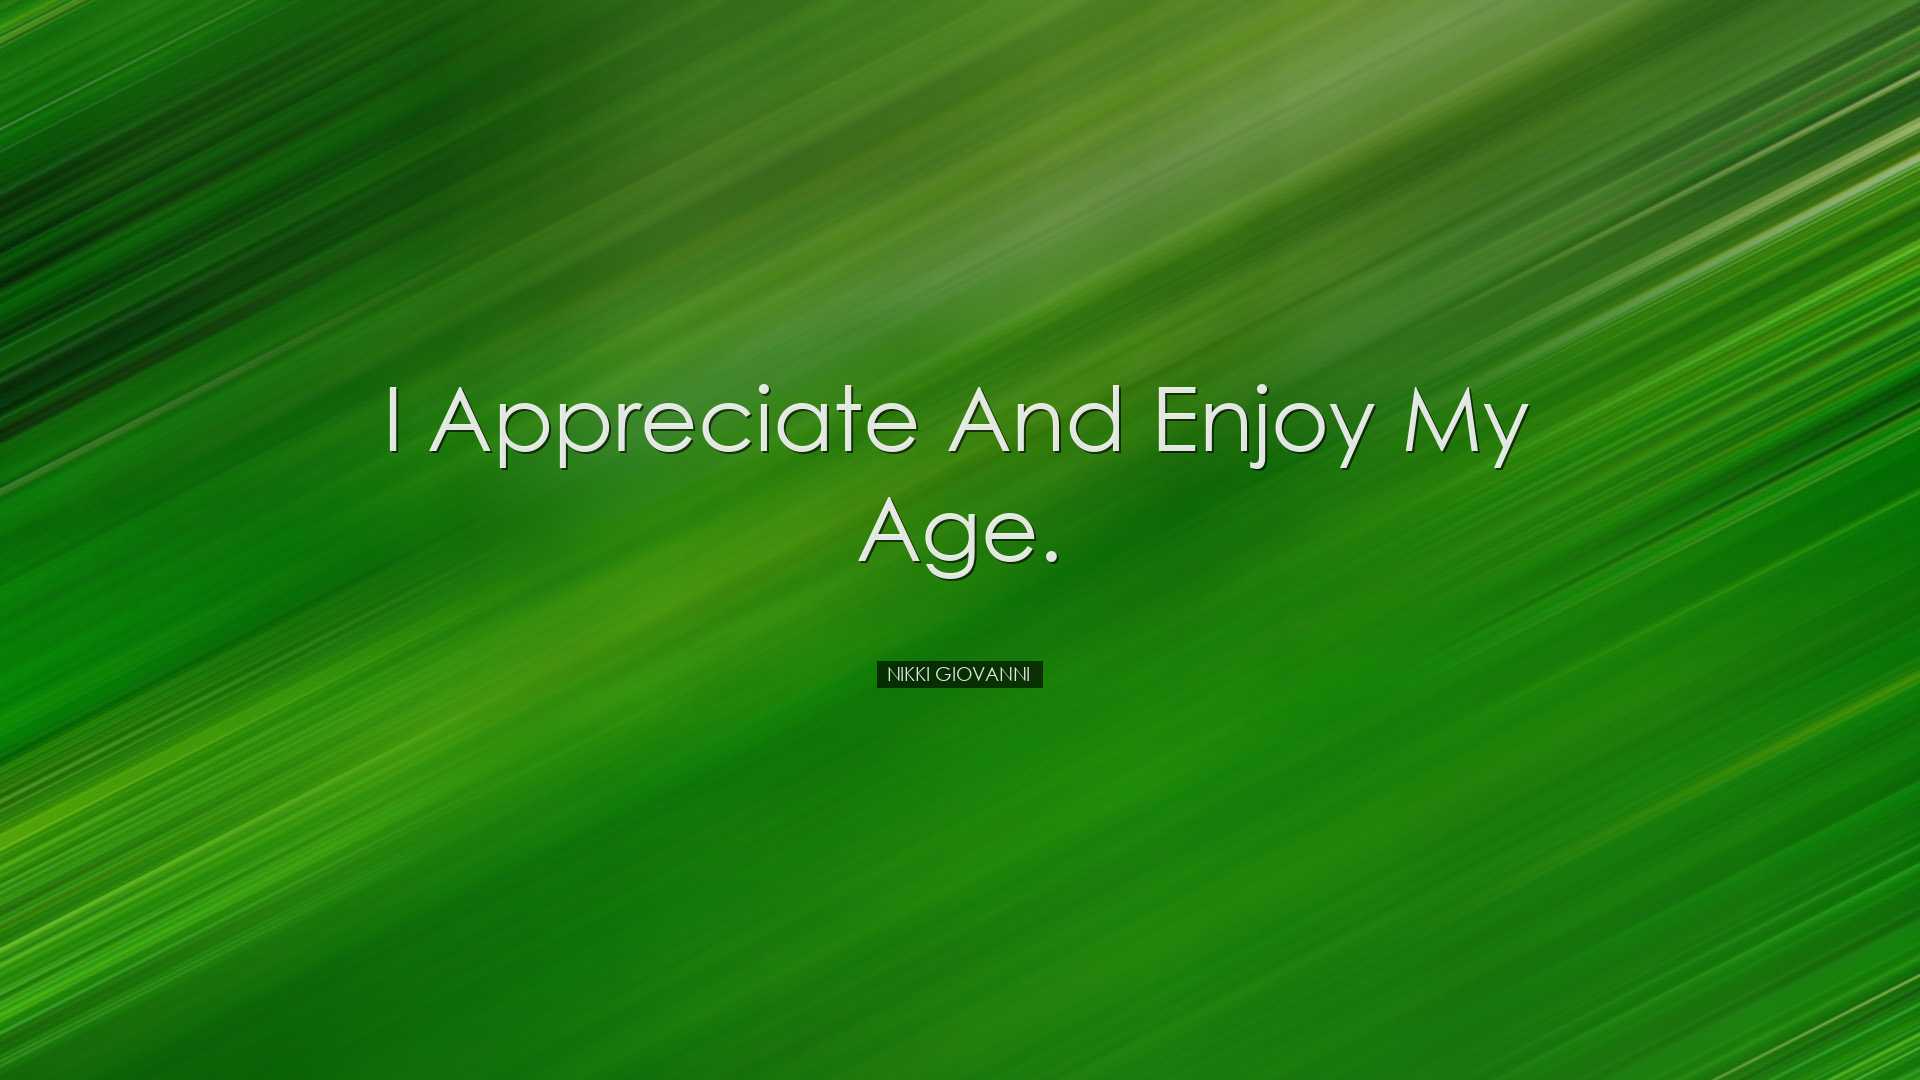 I appreciate and enjoy my age. - Nikki Giovanni